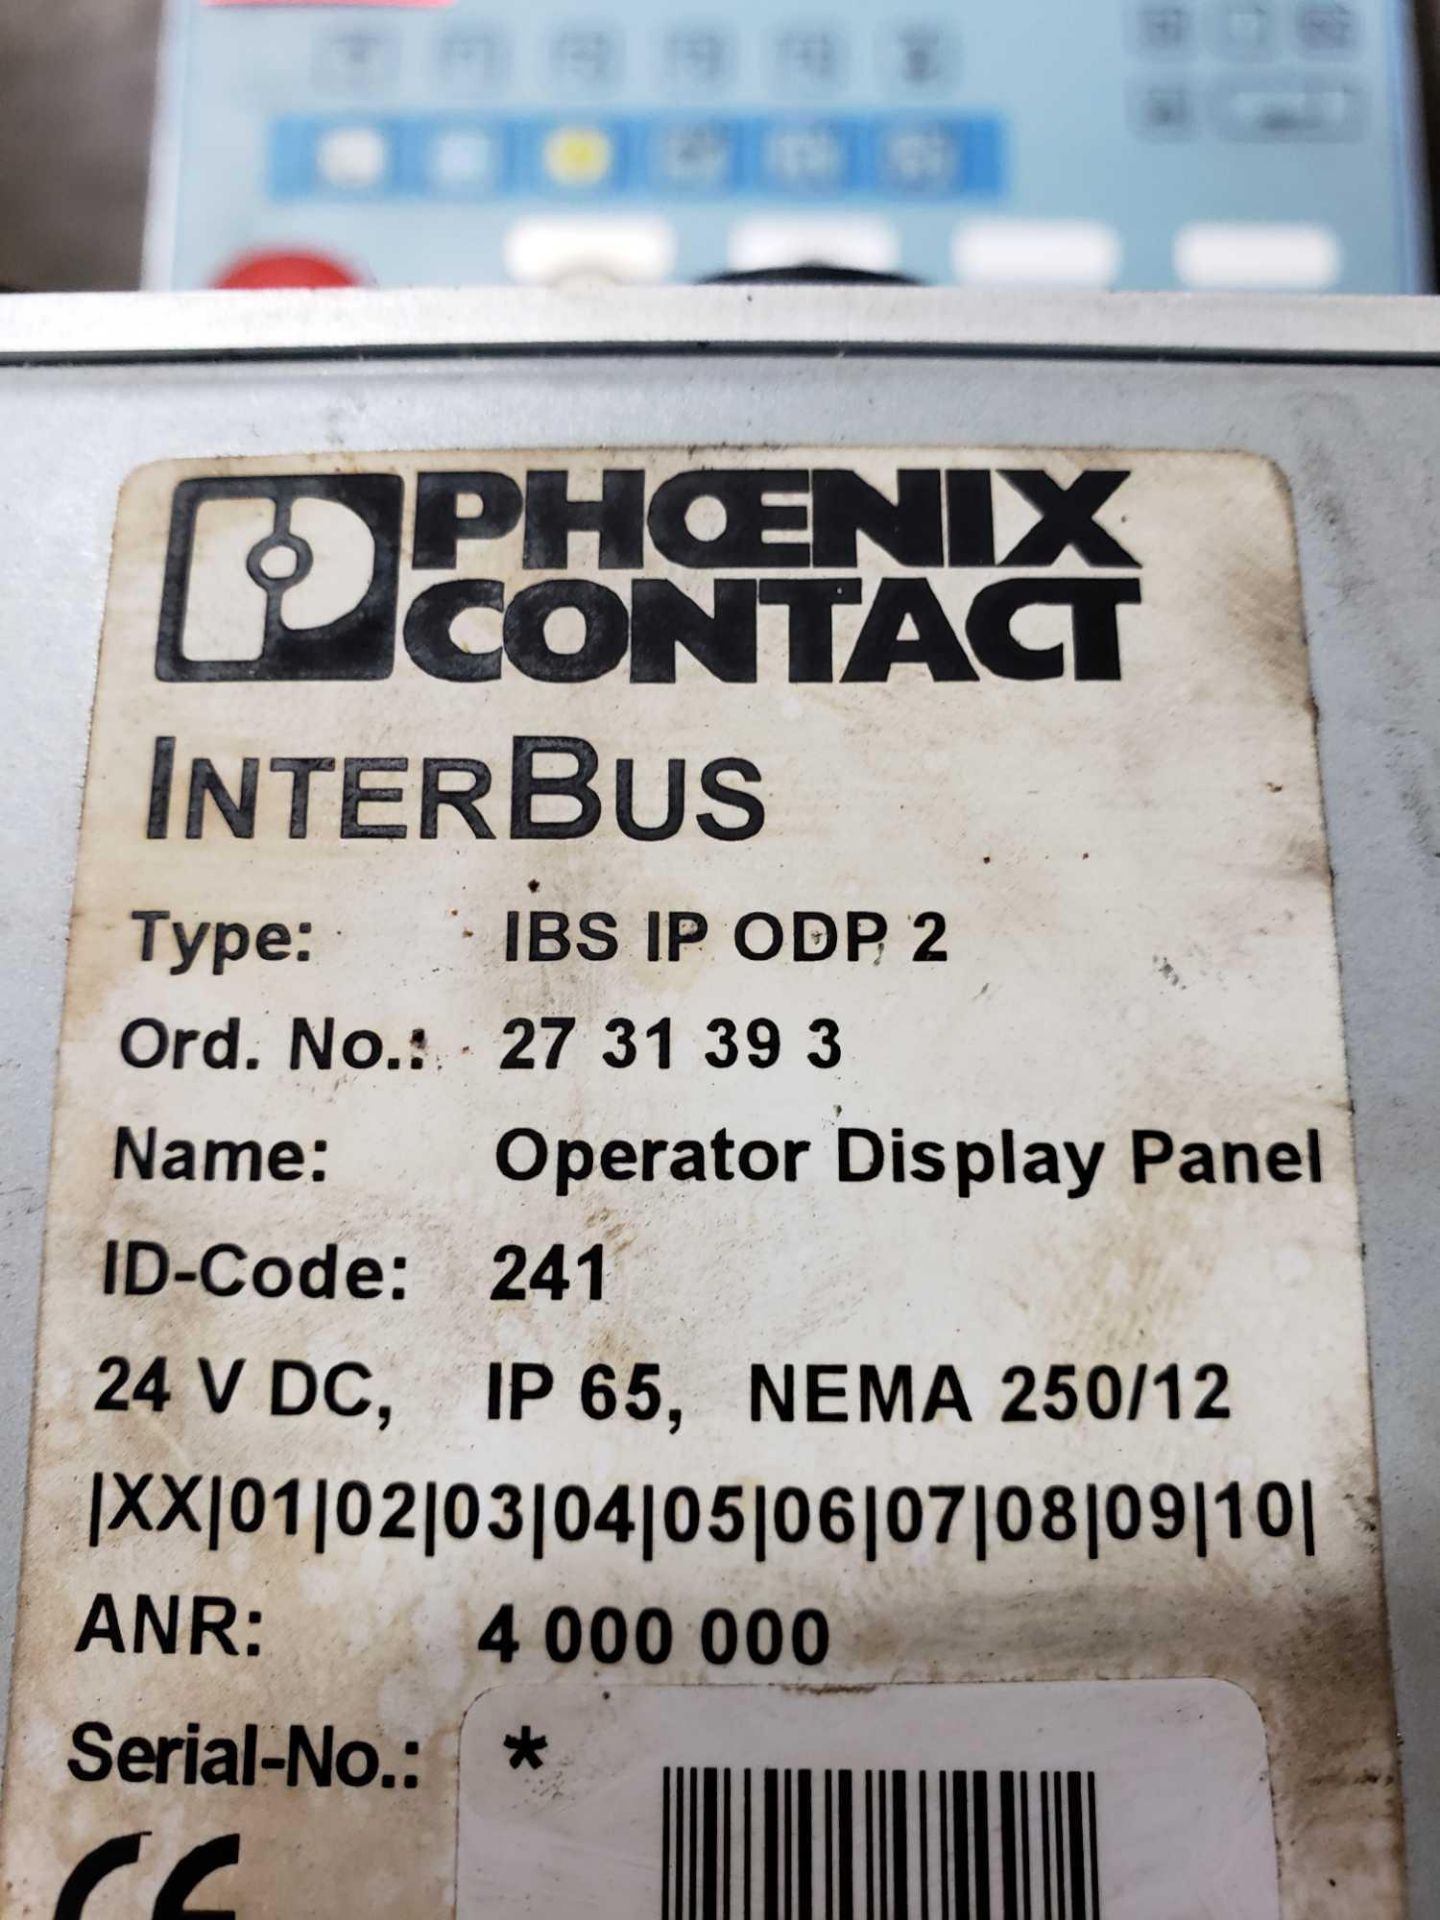 Phoenix Contact Interbus Mode IBS-IP-ODP-2 operator display panel. - Image 2 of 2